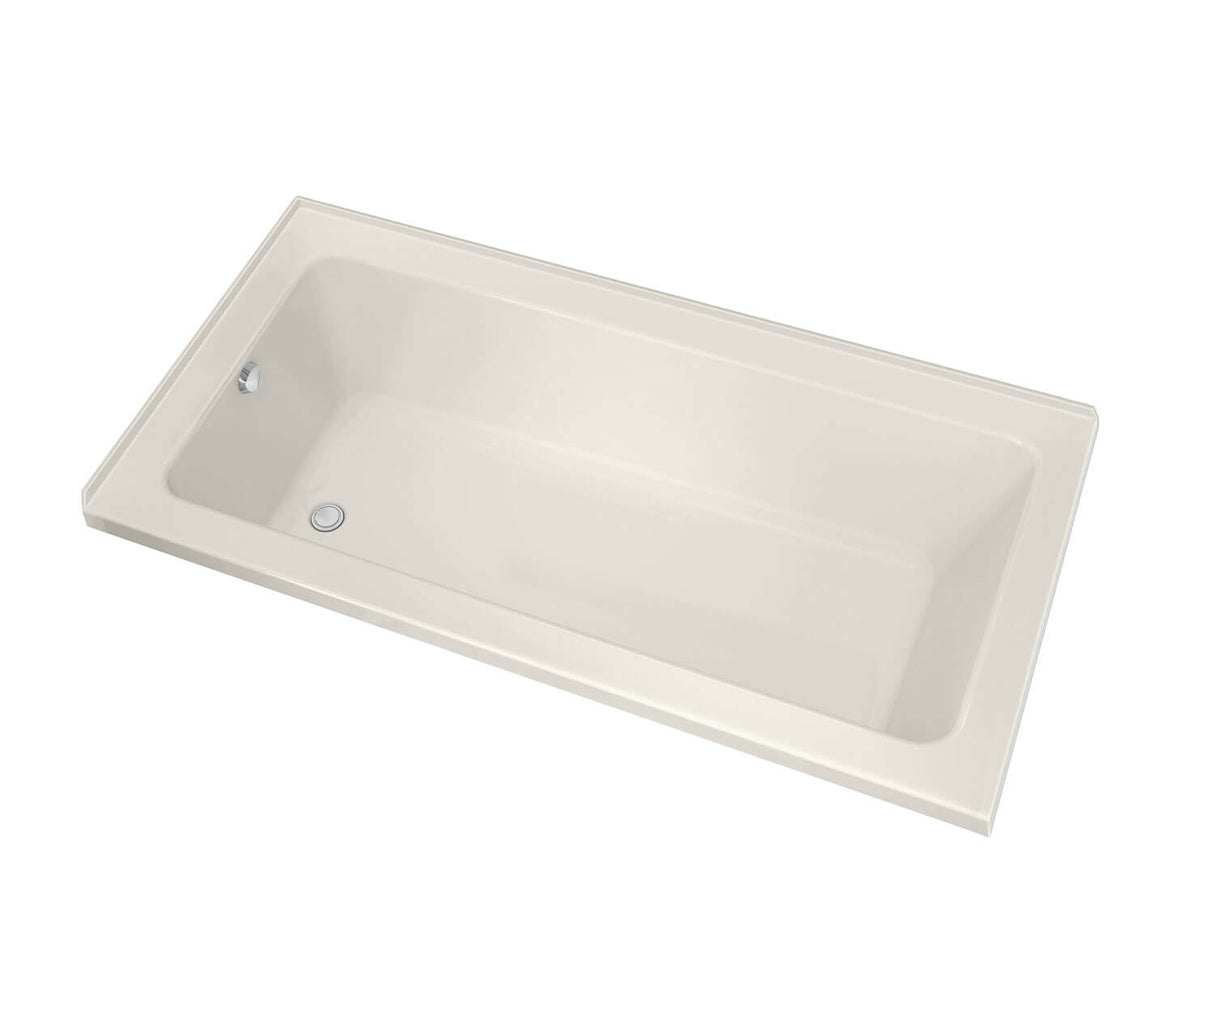 MAAX 106205-L-097-007 Pose 6632 IF Acrylic Corner Left Left-Hand Drain Combined Whirlpool & Aeroeffect Bathtub in Biscuit